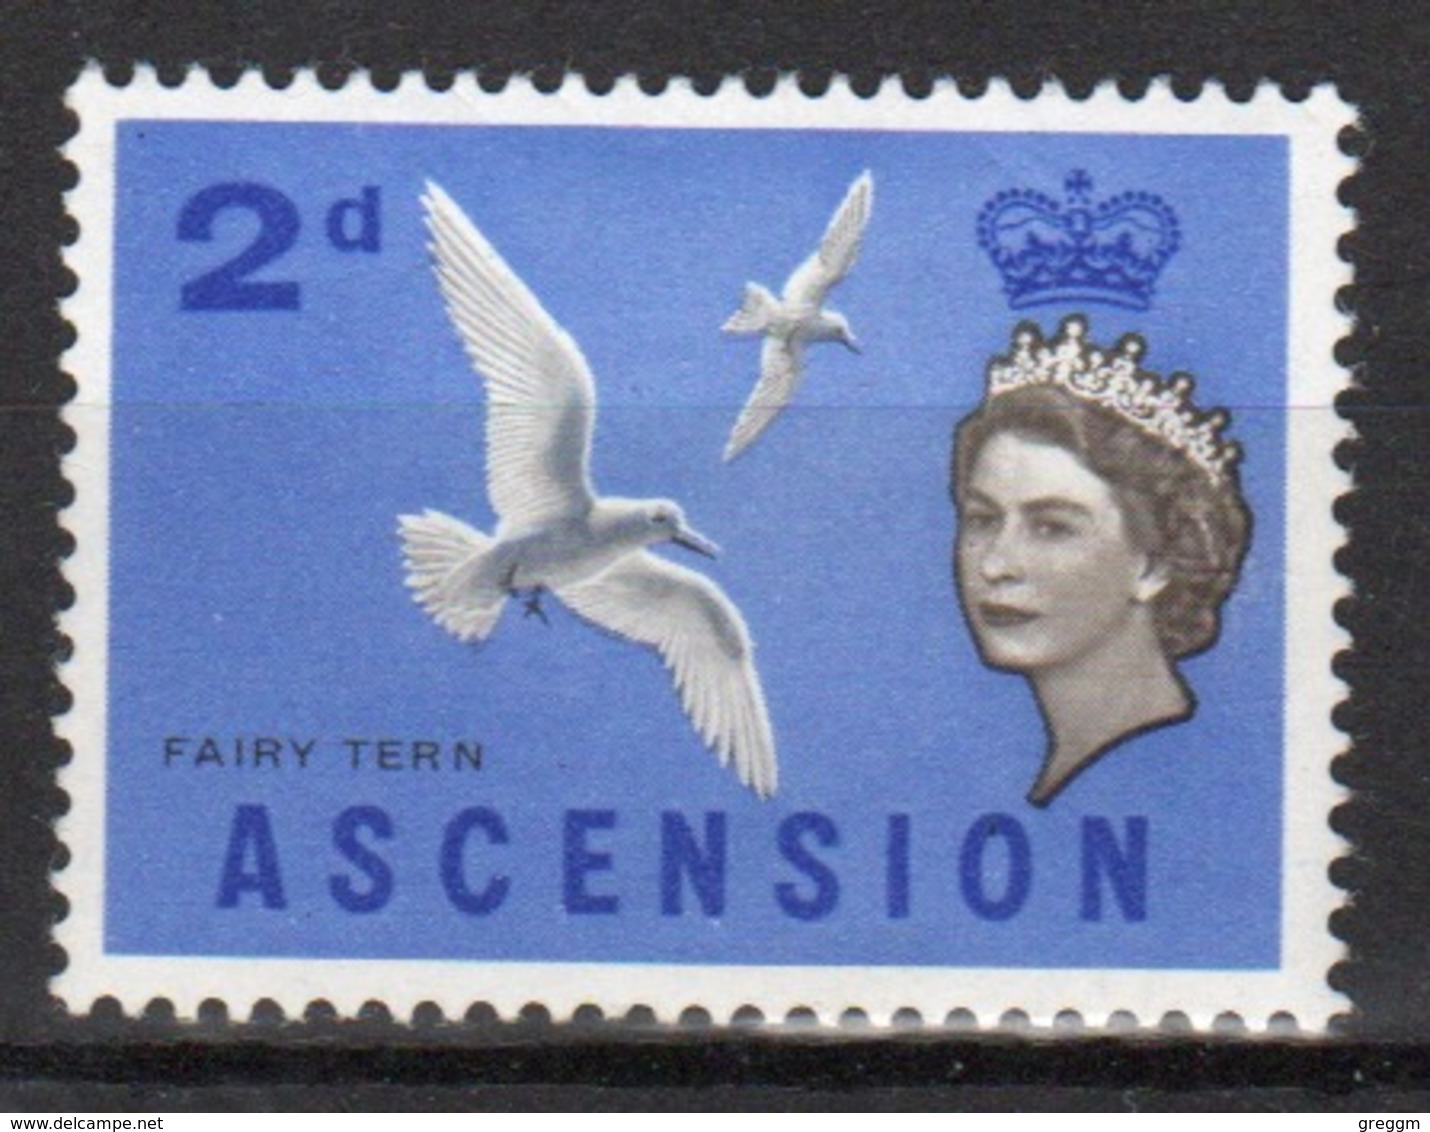 Ascension Queen Elizabeth  Mounted Mint 2d Stamp From 1963 Definitive Set Of Birds. - Ascension